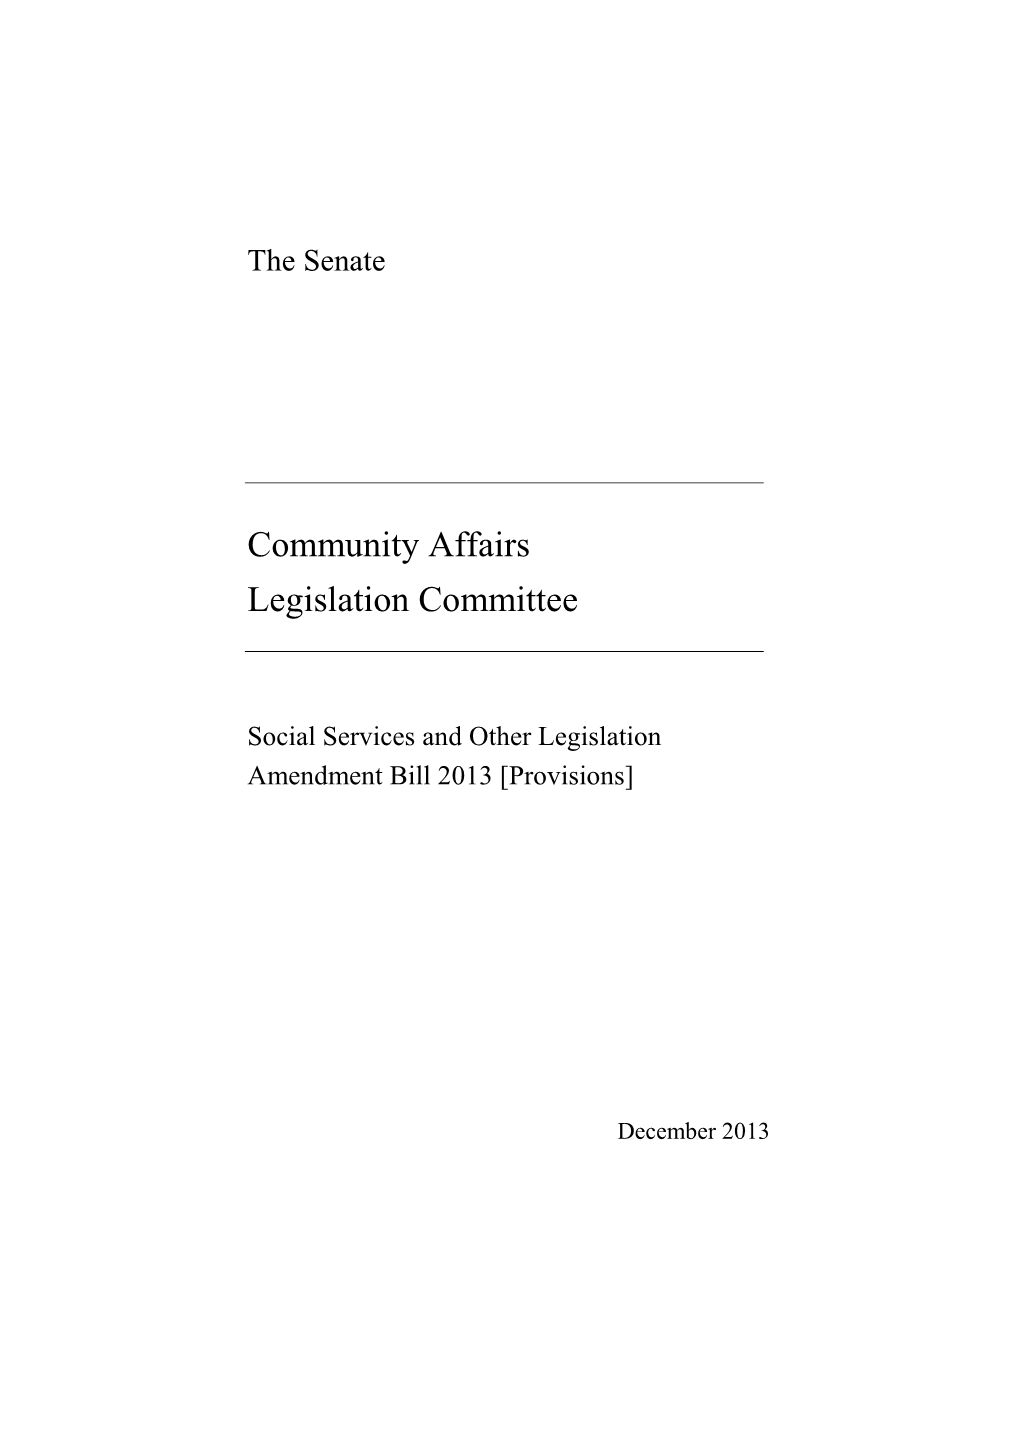 Social Services and Other Legislation Amendment Bill 2013 [Provisions]